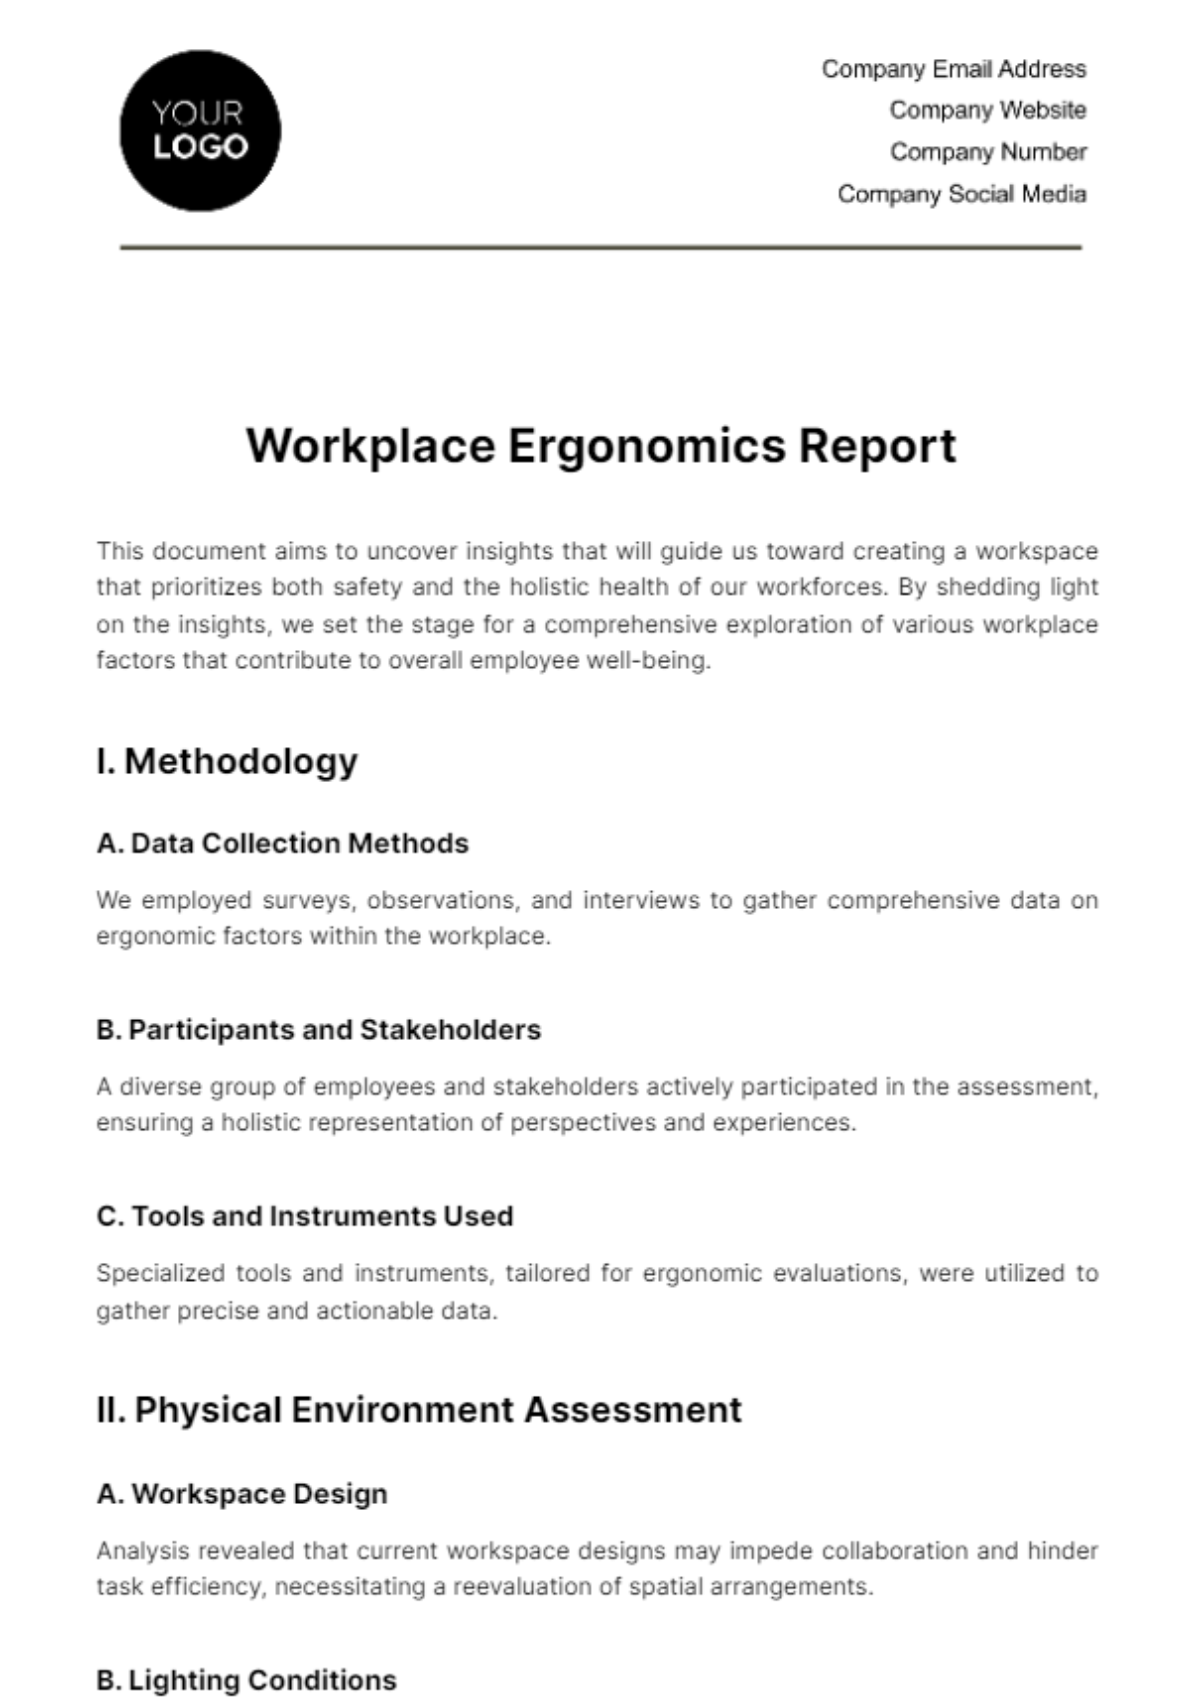 Workplace Ergonomics Report Template